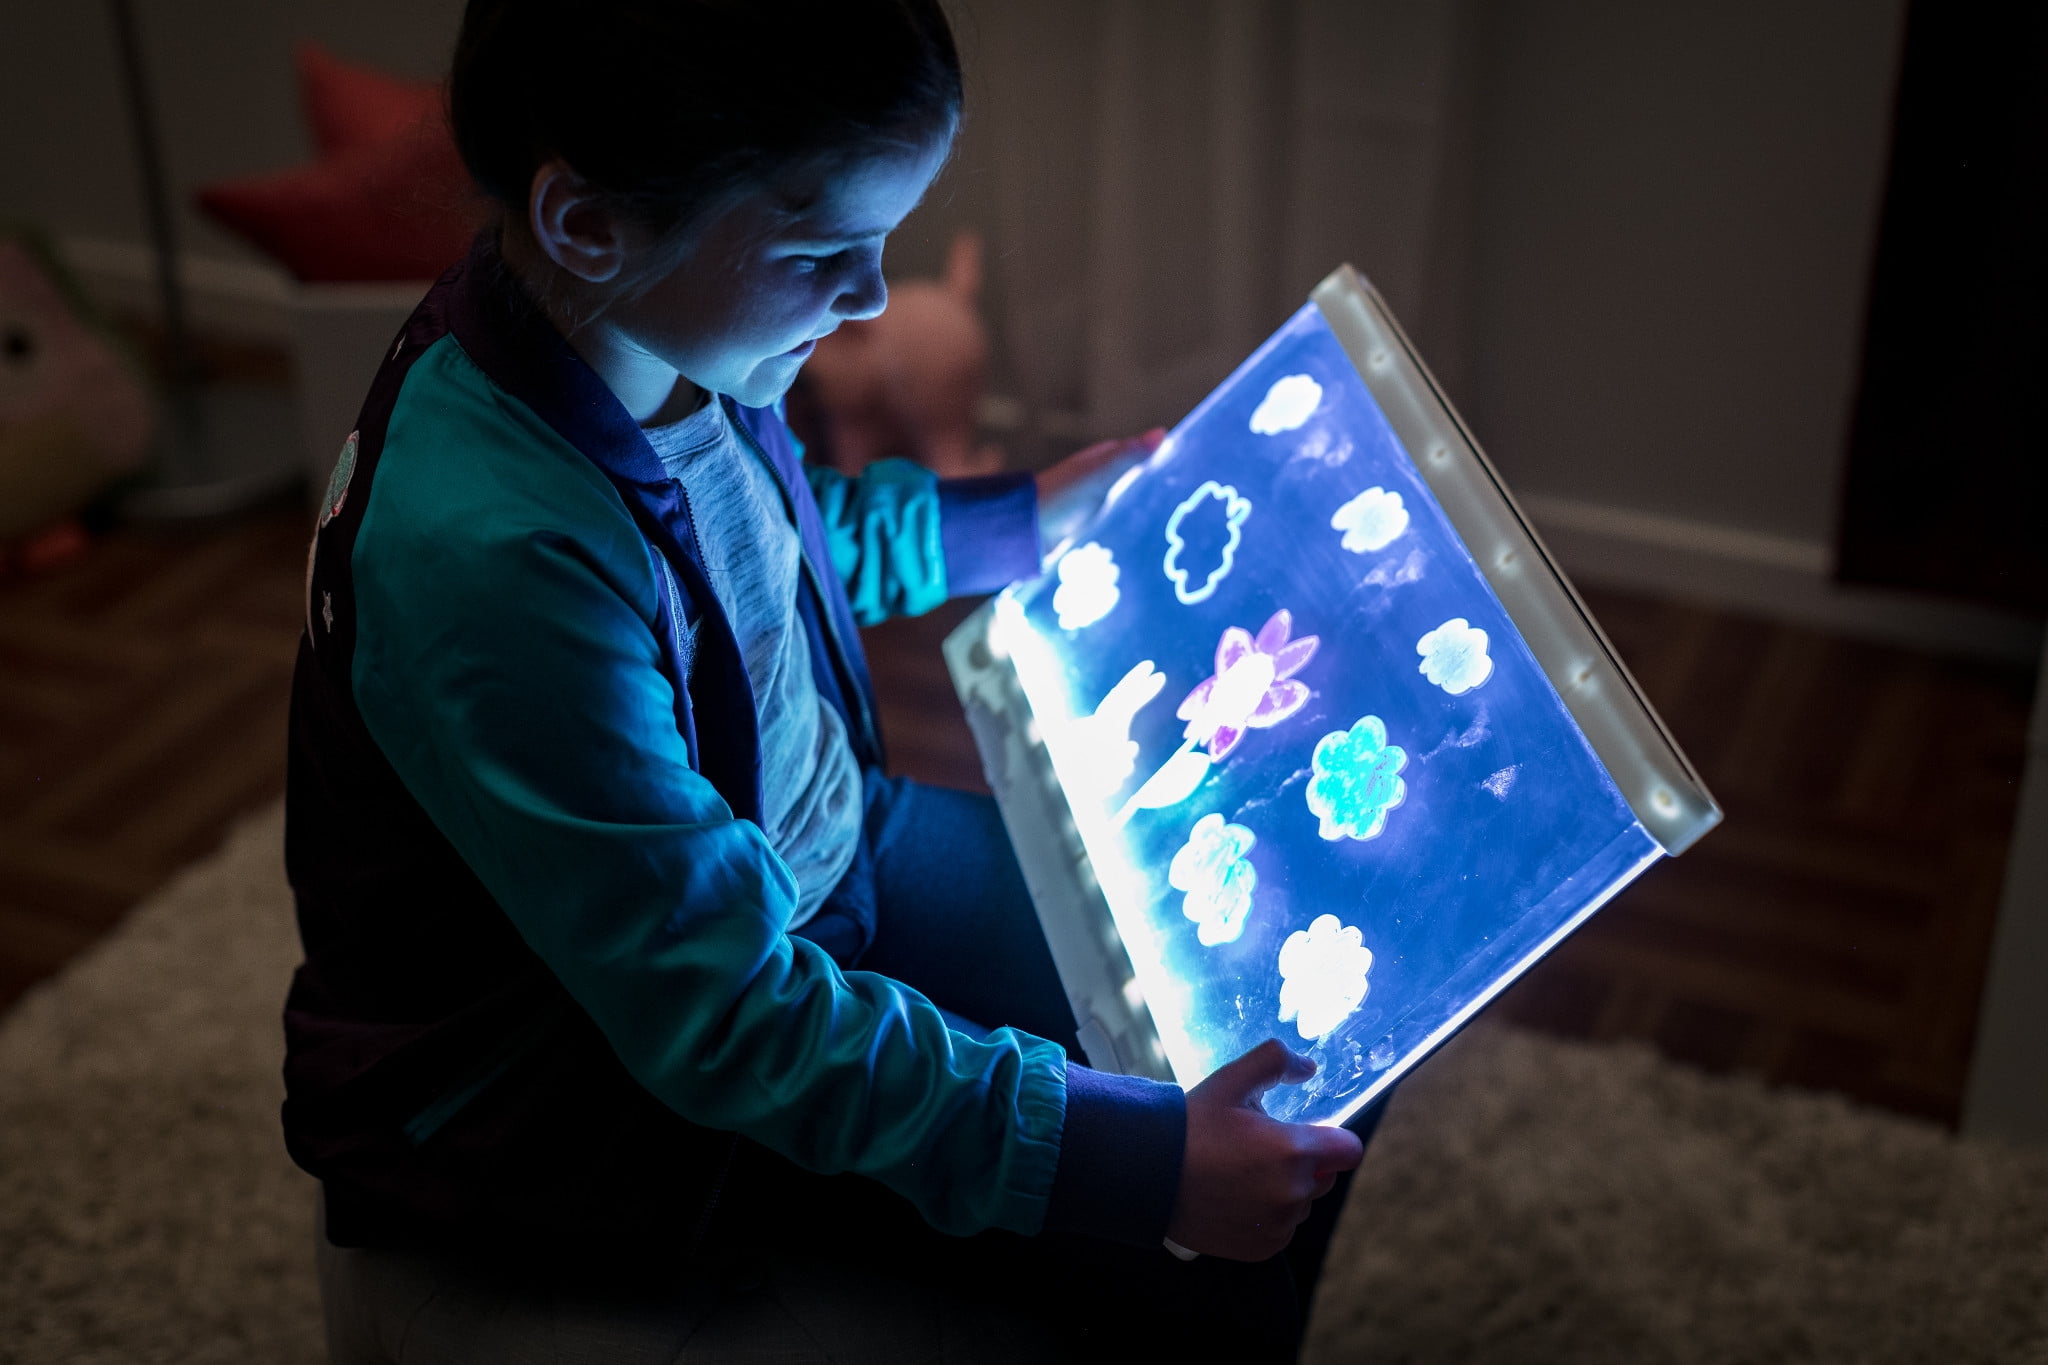 Crayola Ultimate Light Board Drawing Tablet Coloring Set, Light-Up Toys for  Kids, Beginner Child